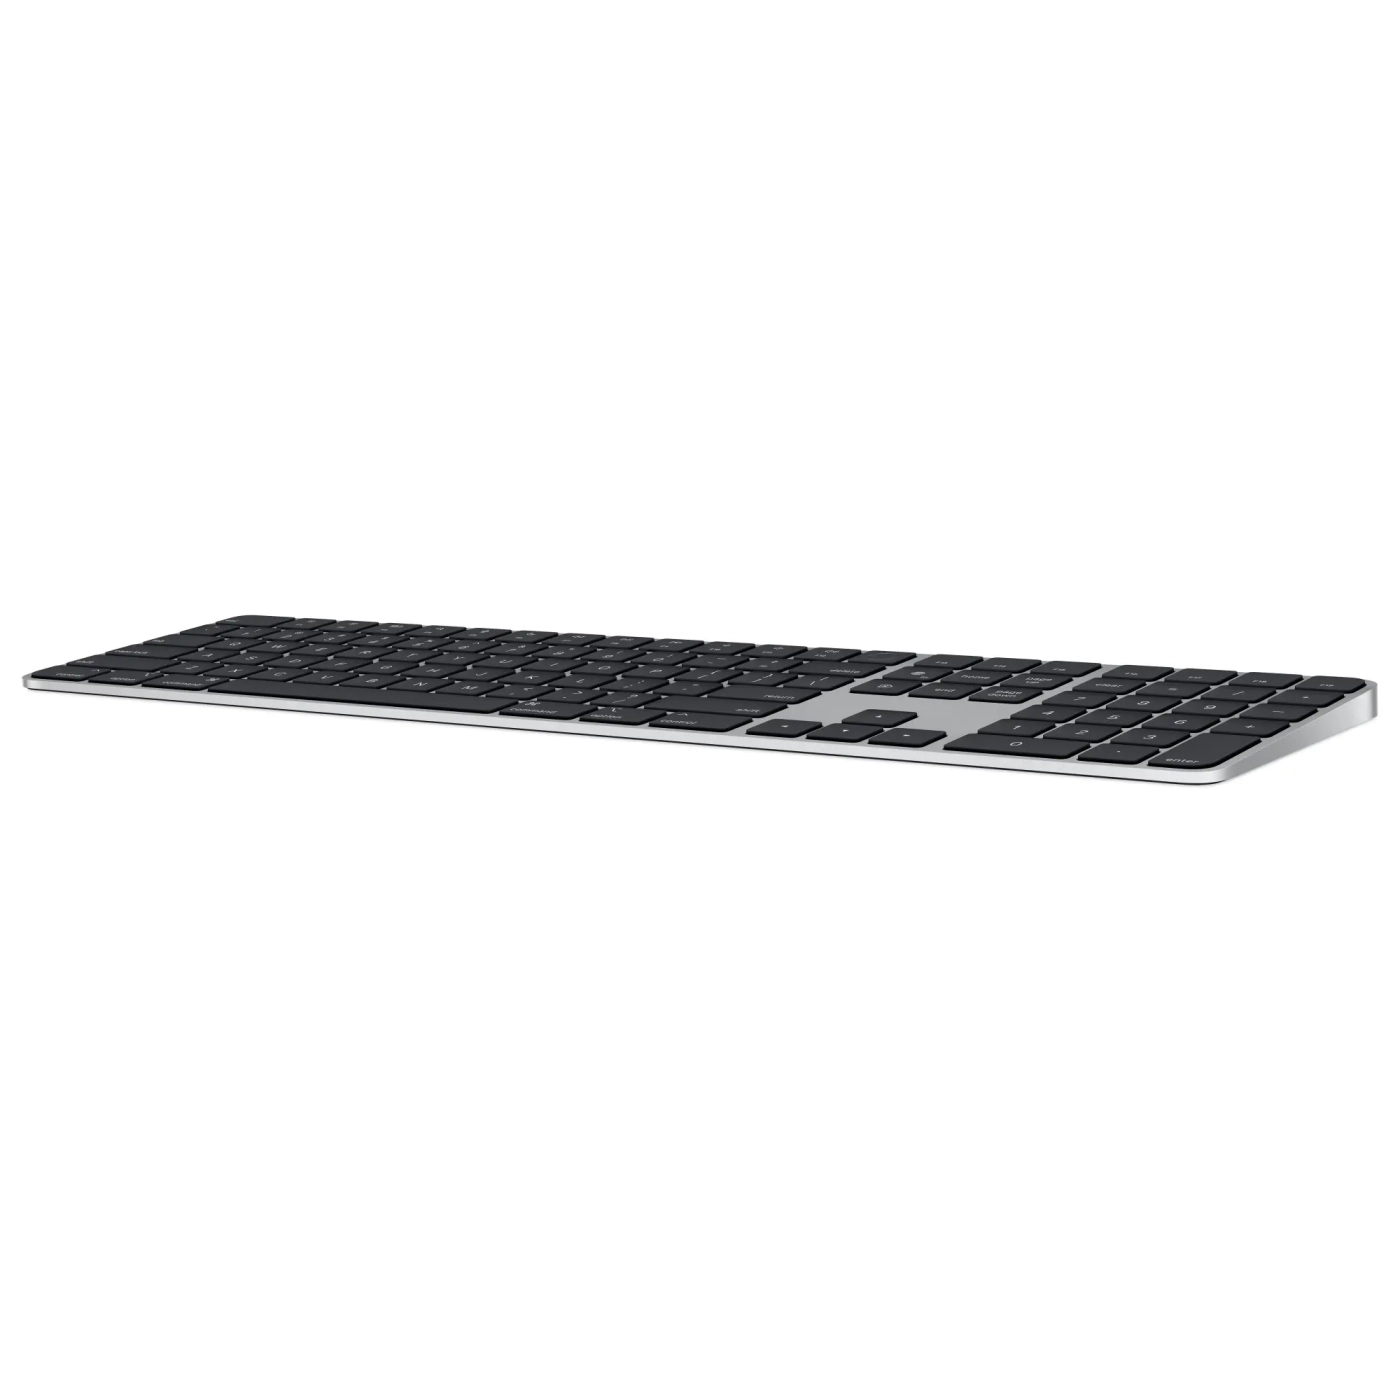 Купить Клавиатура Apple Magic Keyboard с Touch ID и цифровой панелью Black - фото 2